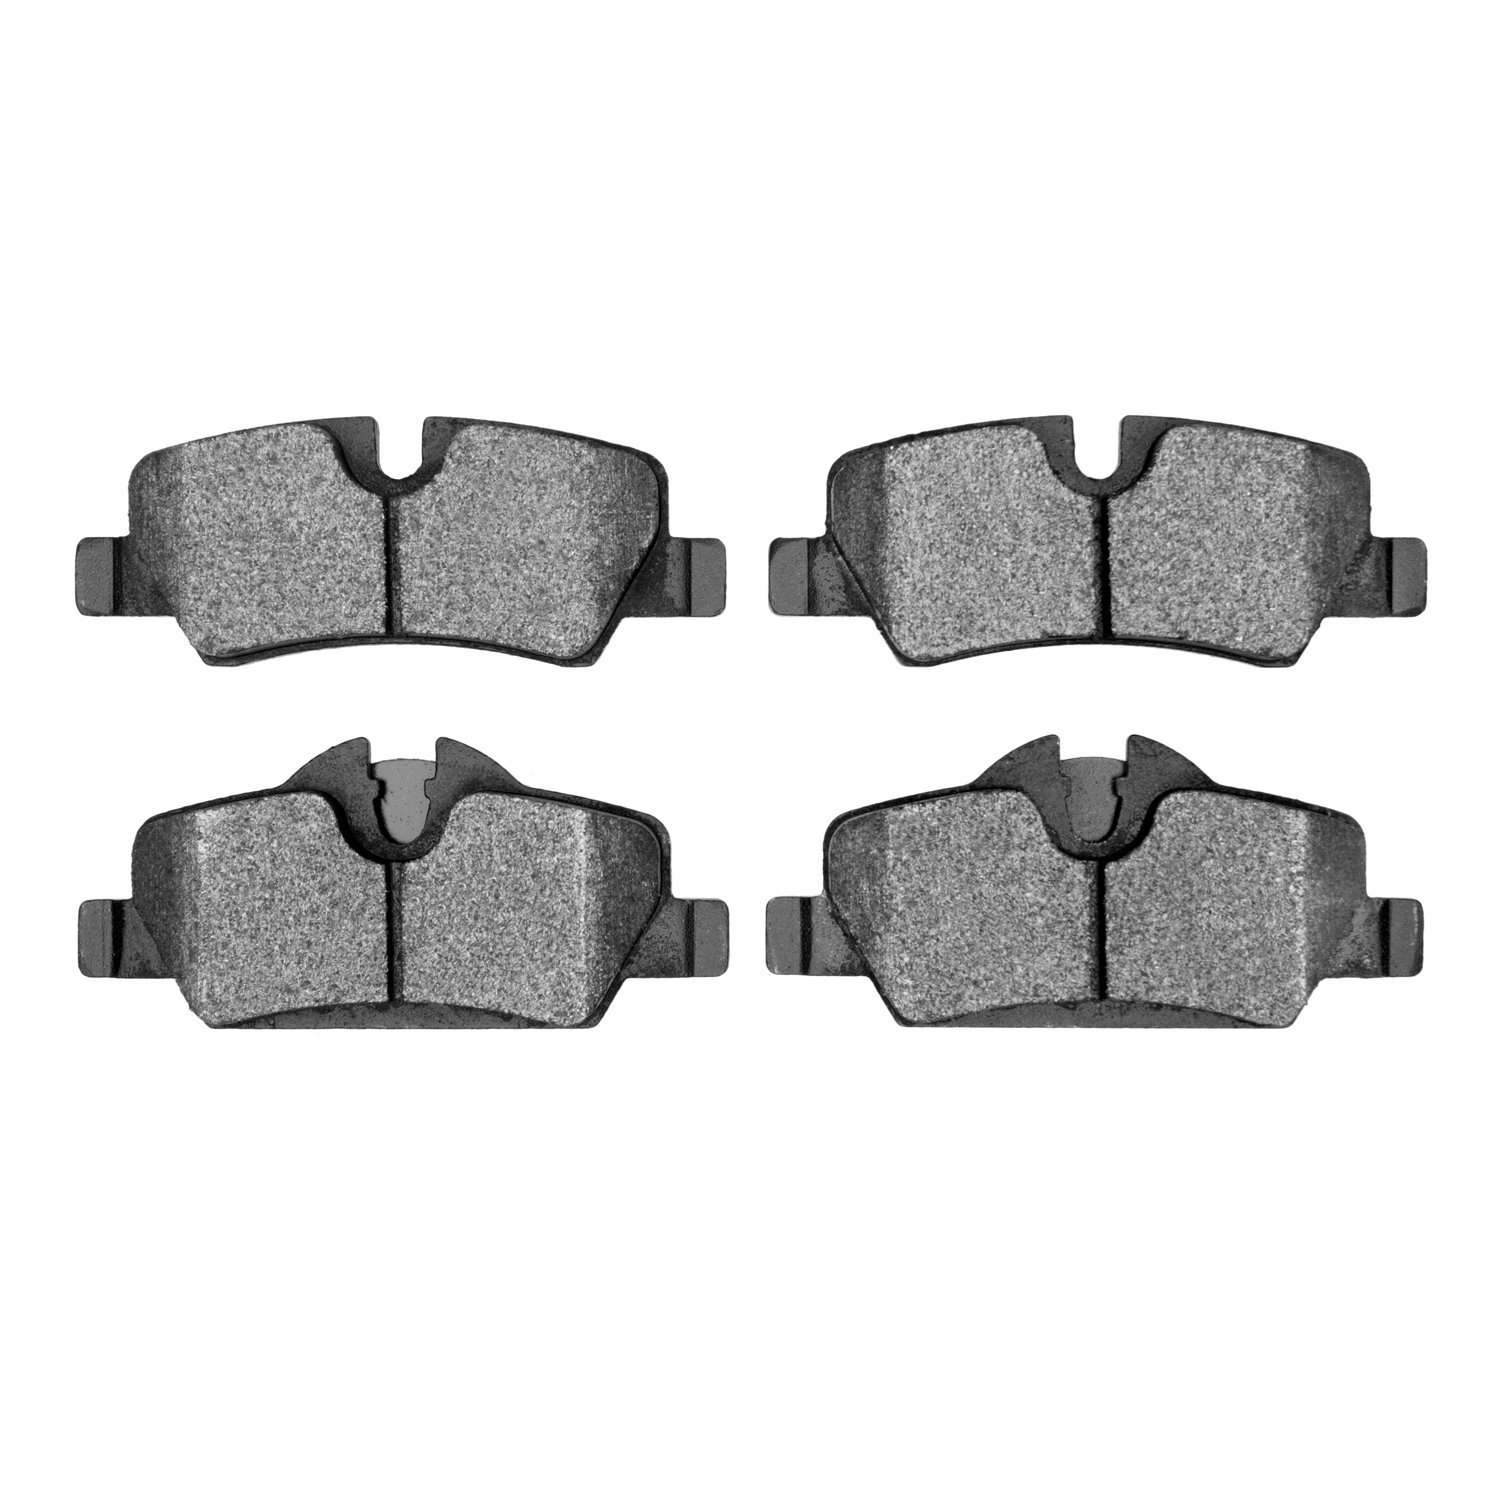 1000-1800-00 Track/Street Low-Metallic Brake Pads Kit, Fits Select Mini, Position: Rear